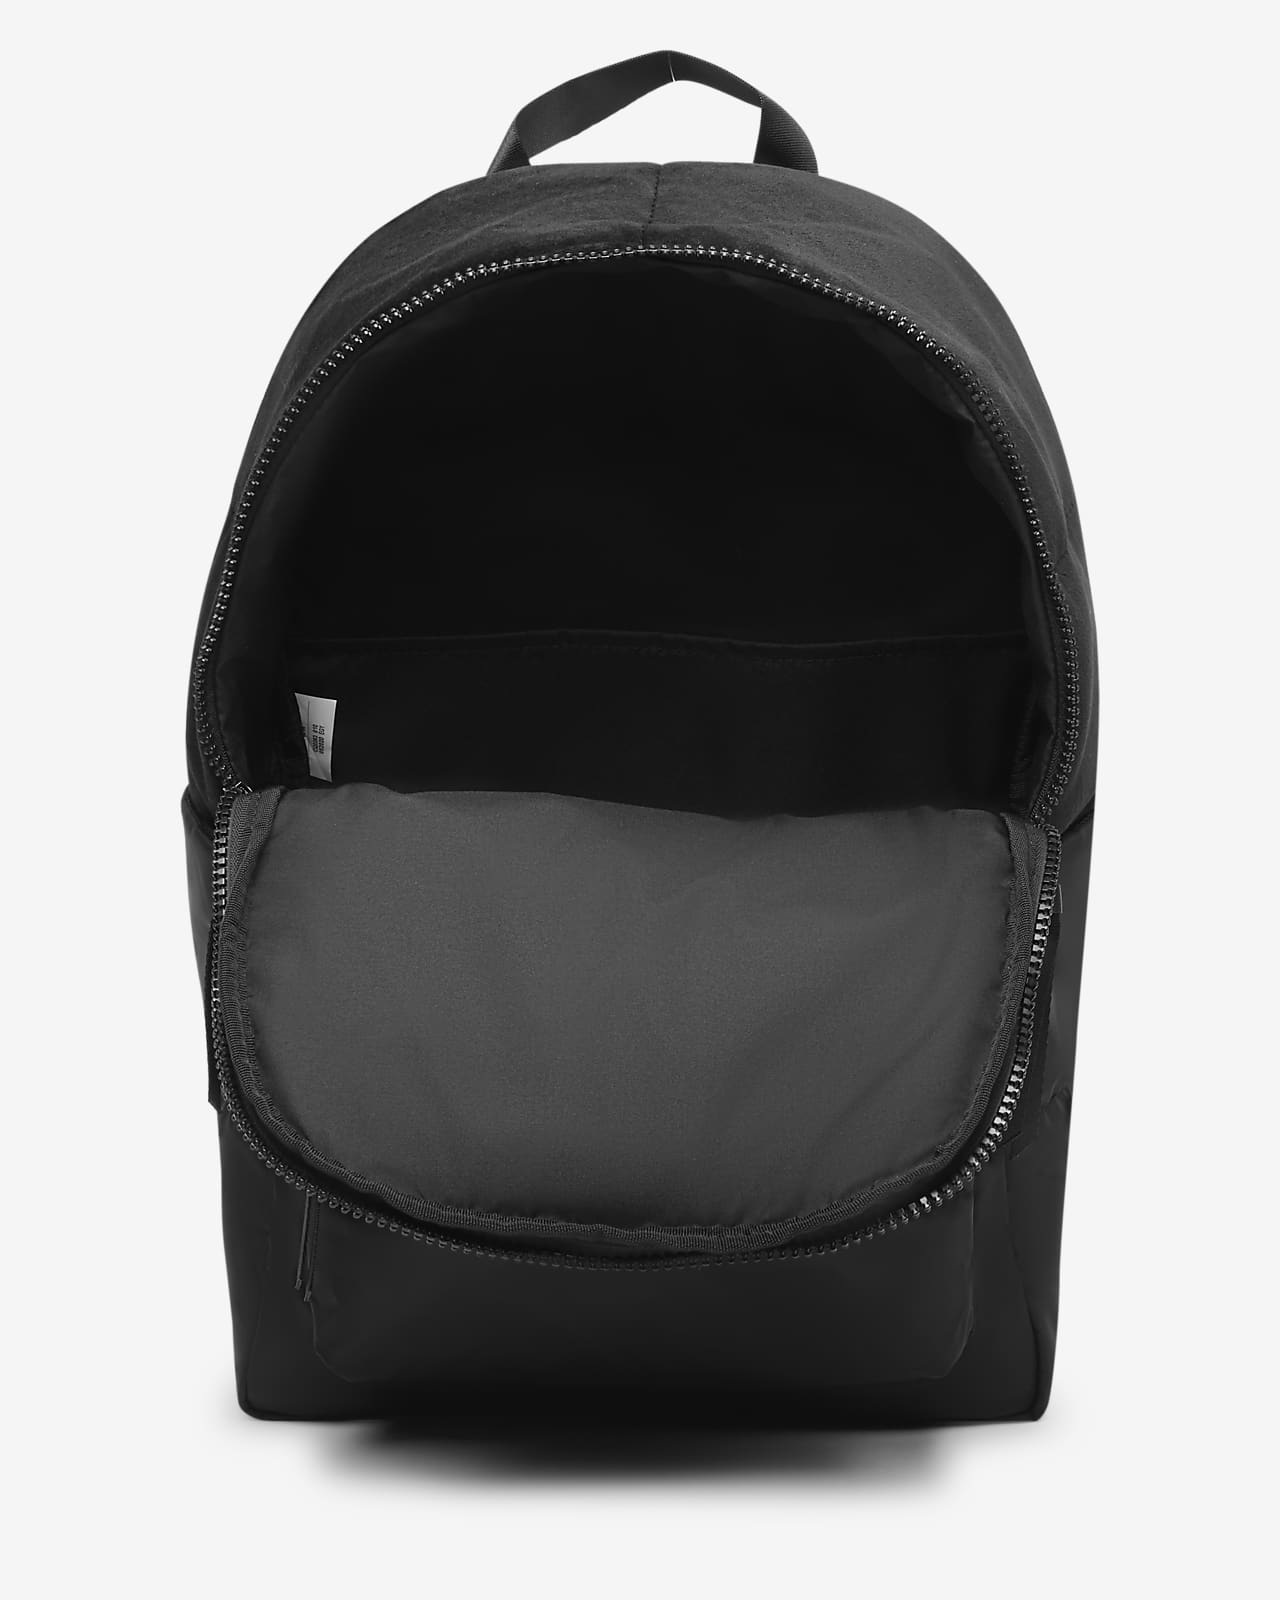 nike mesh panel pocket black backpack